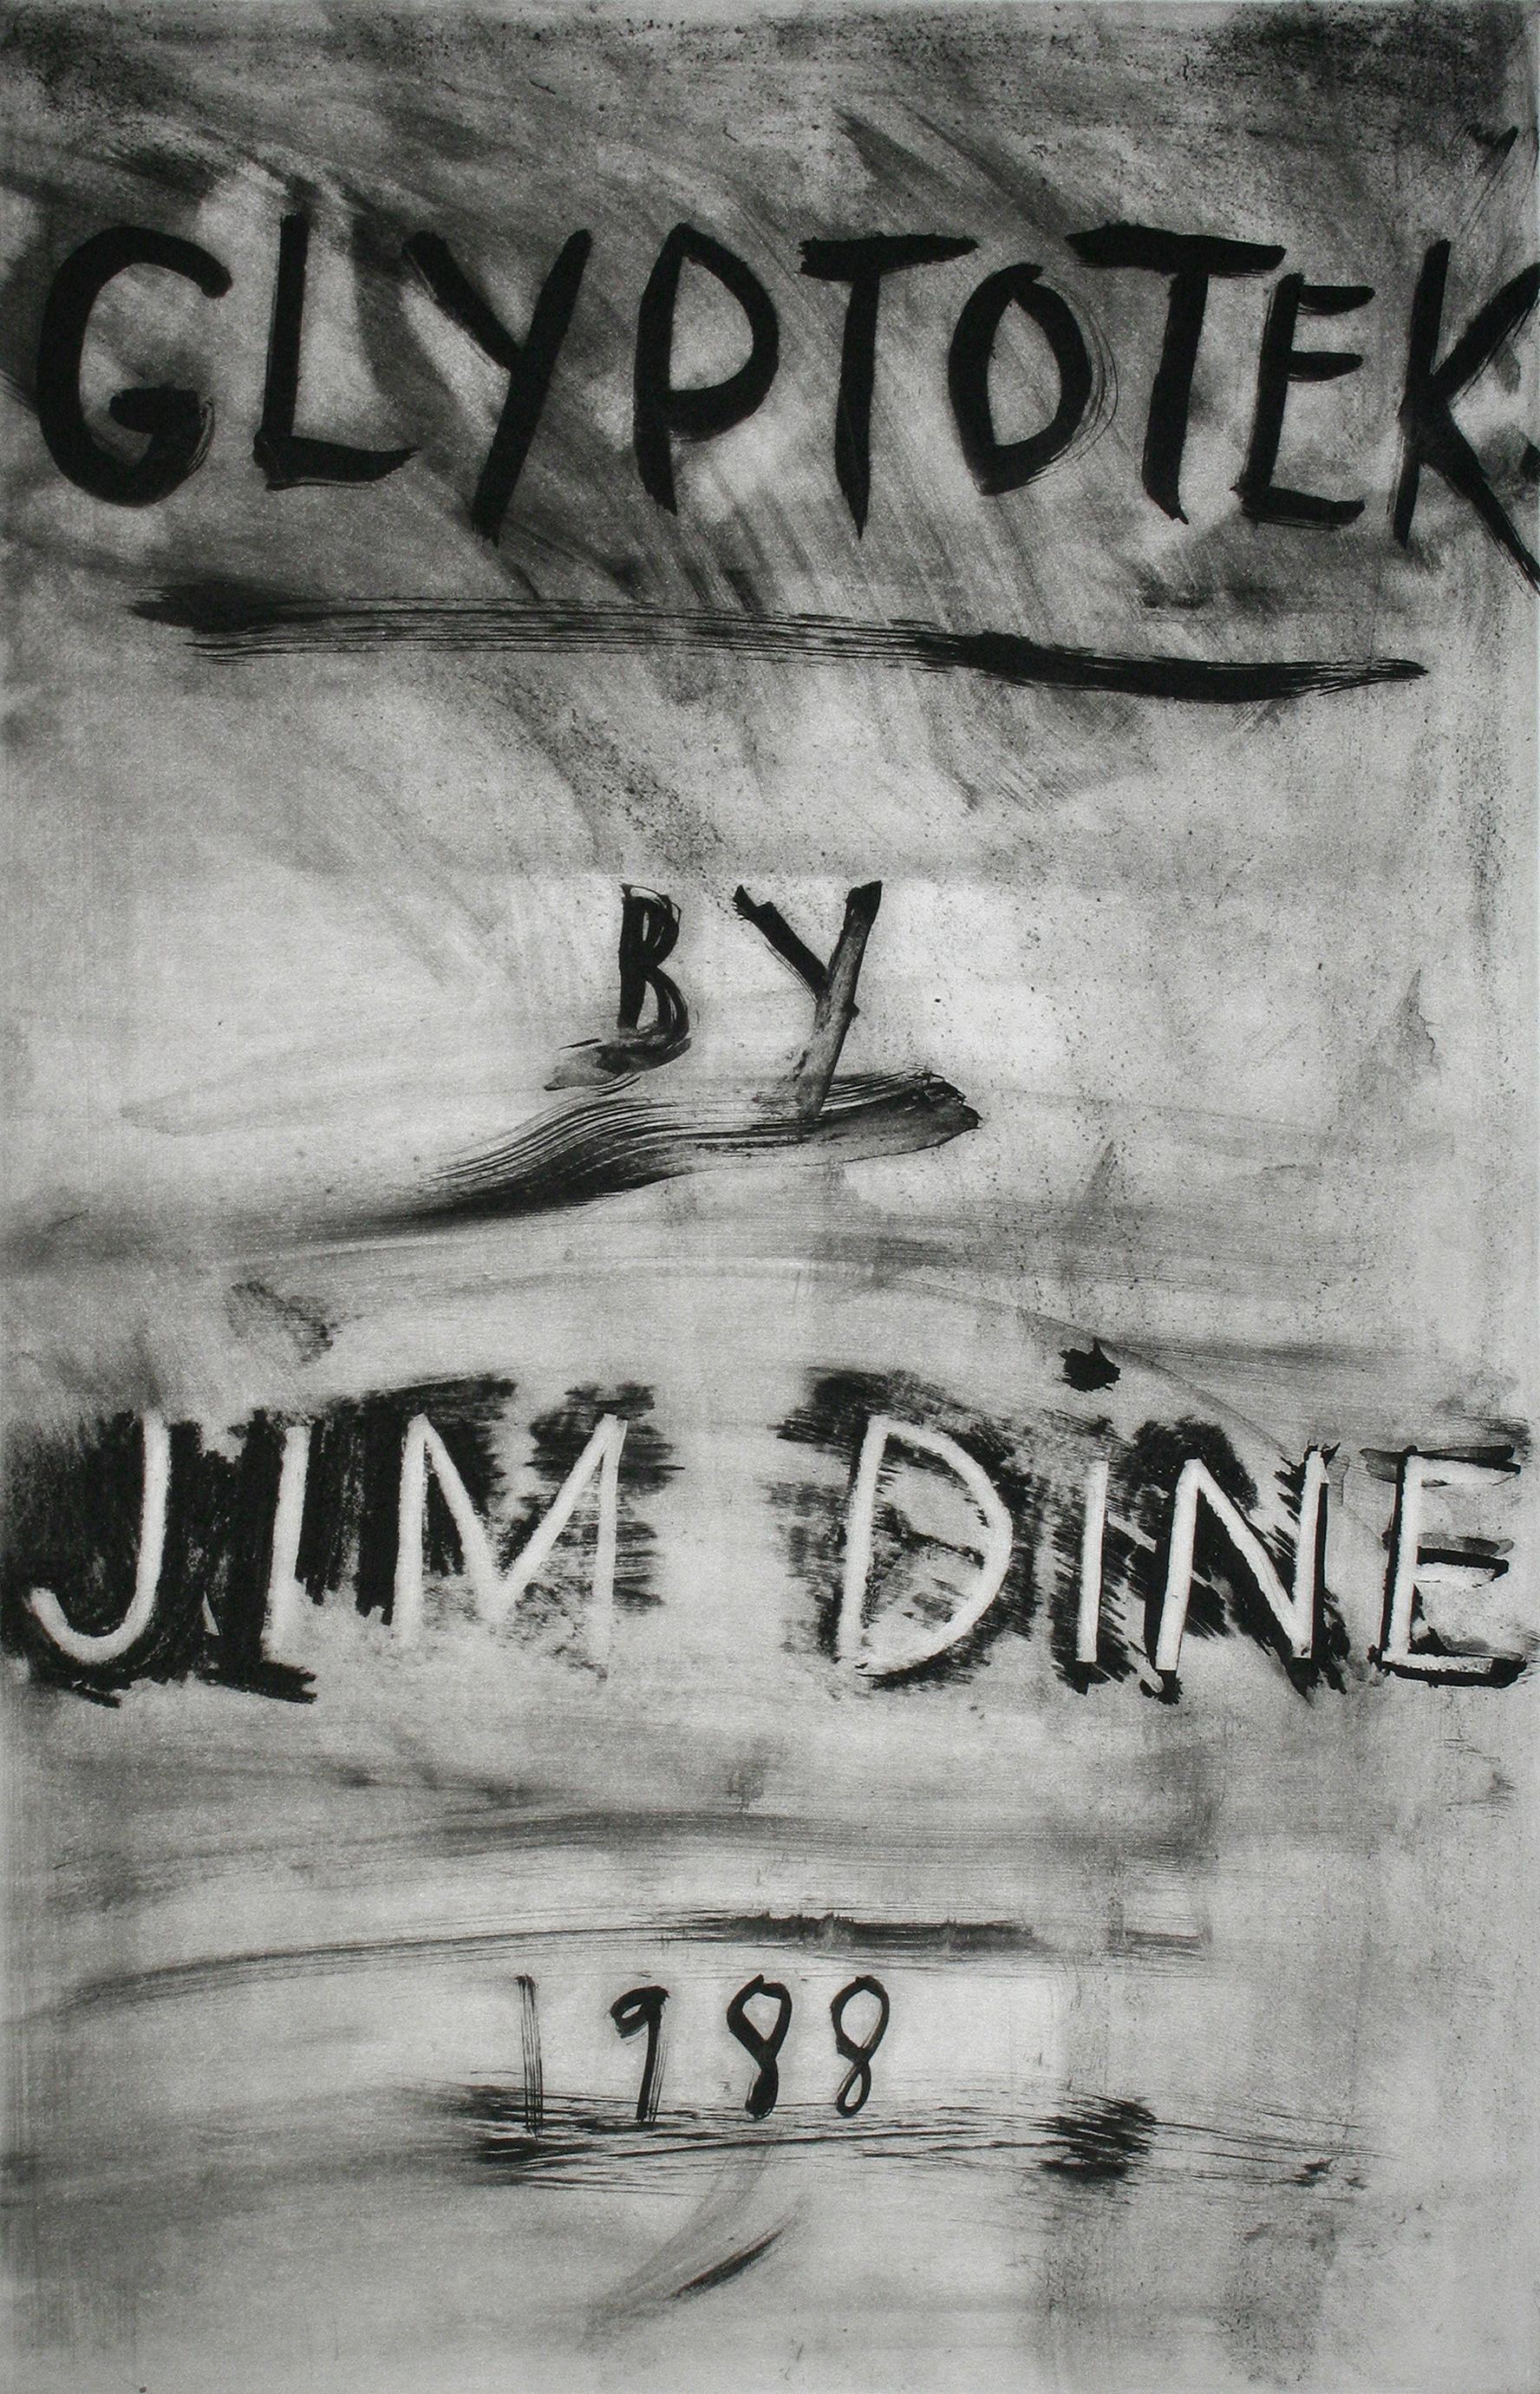 Glyptotek - Art by (after) Jim Dine